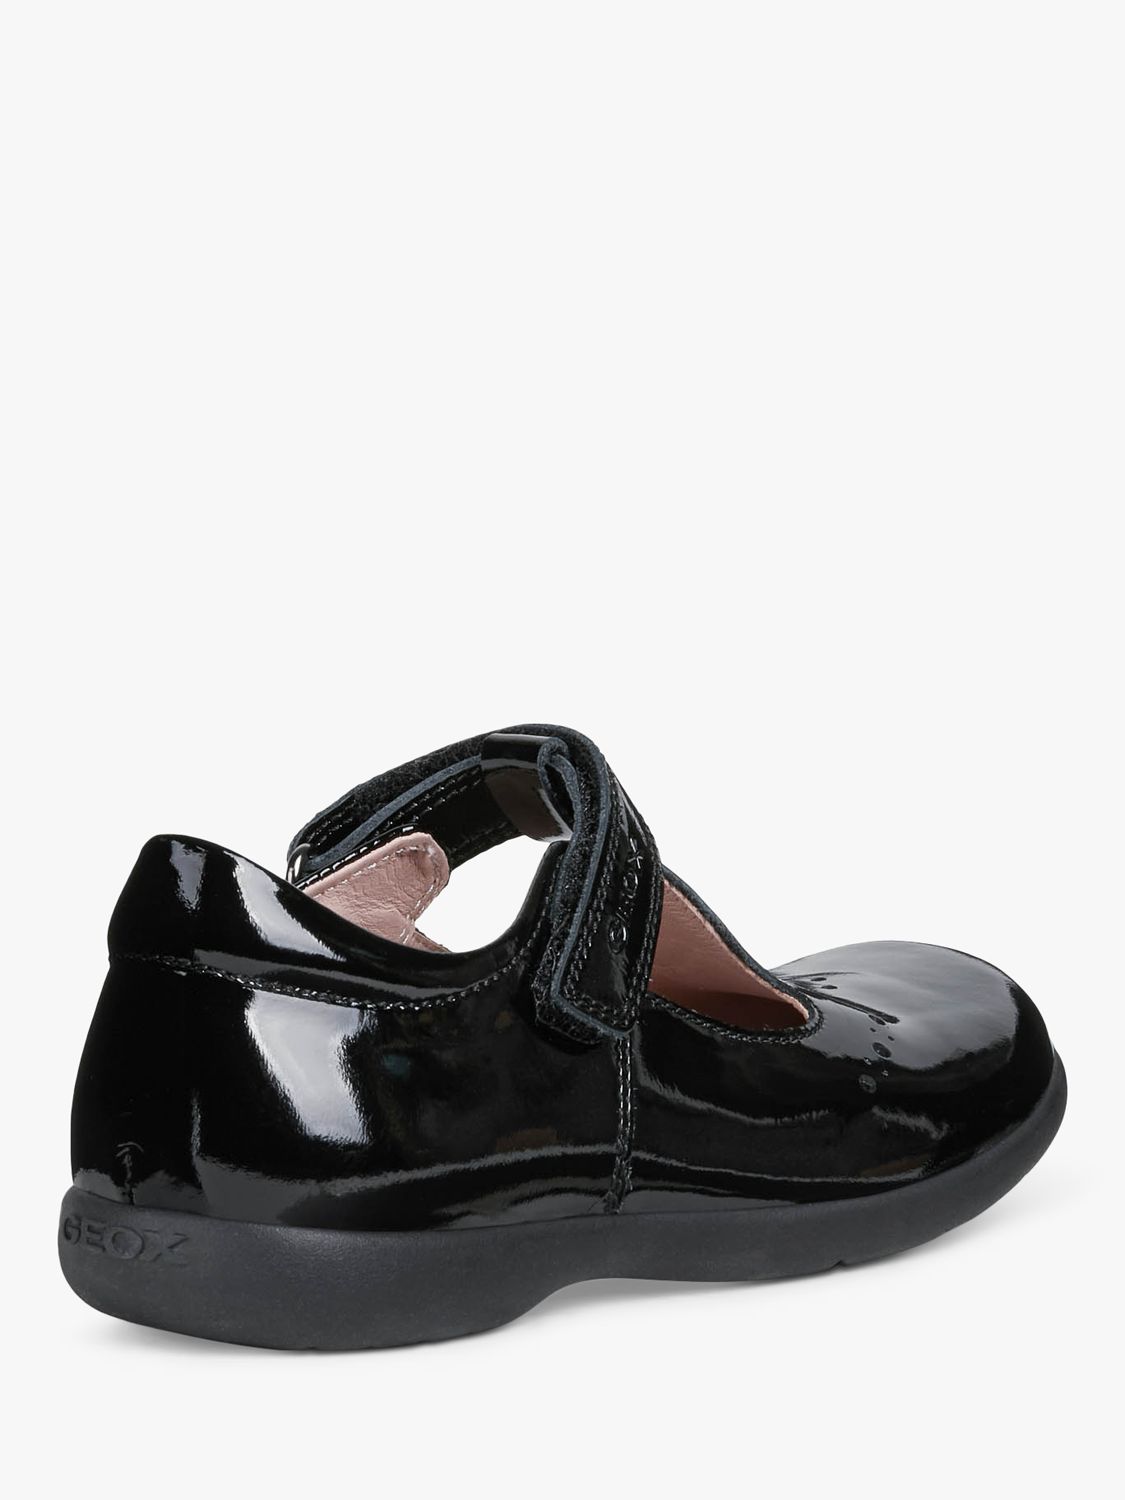 Geox Kids' Naimara Patent Leather T-Bar School Shoes, Black, EU26